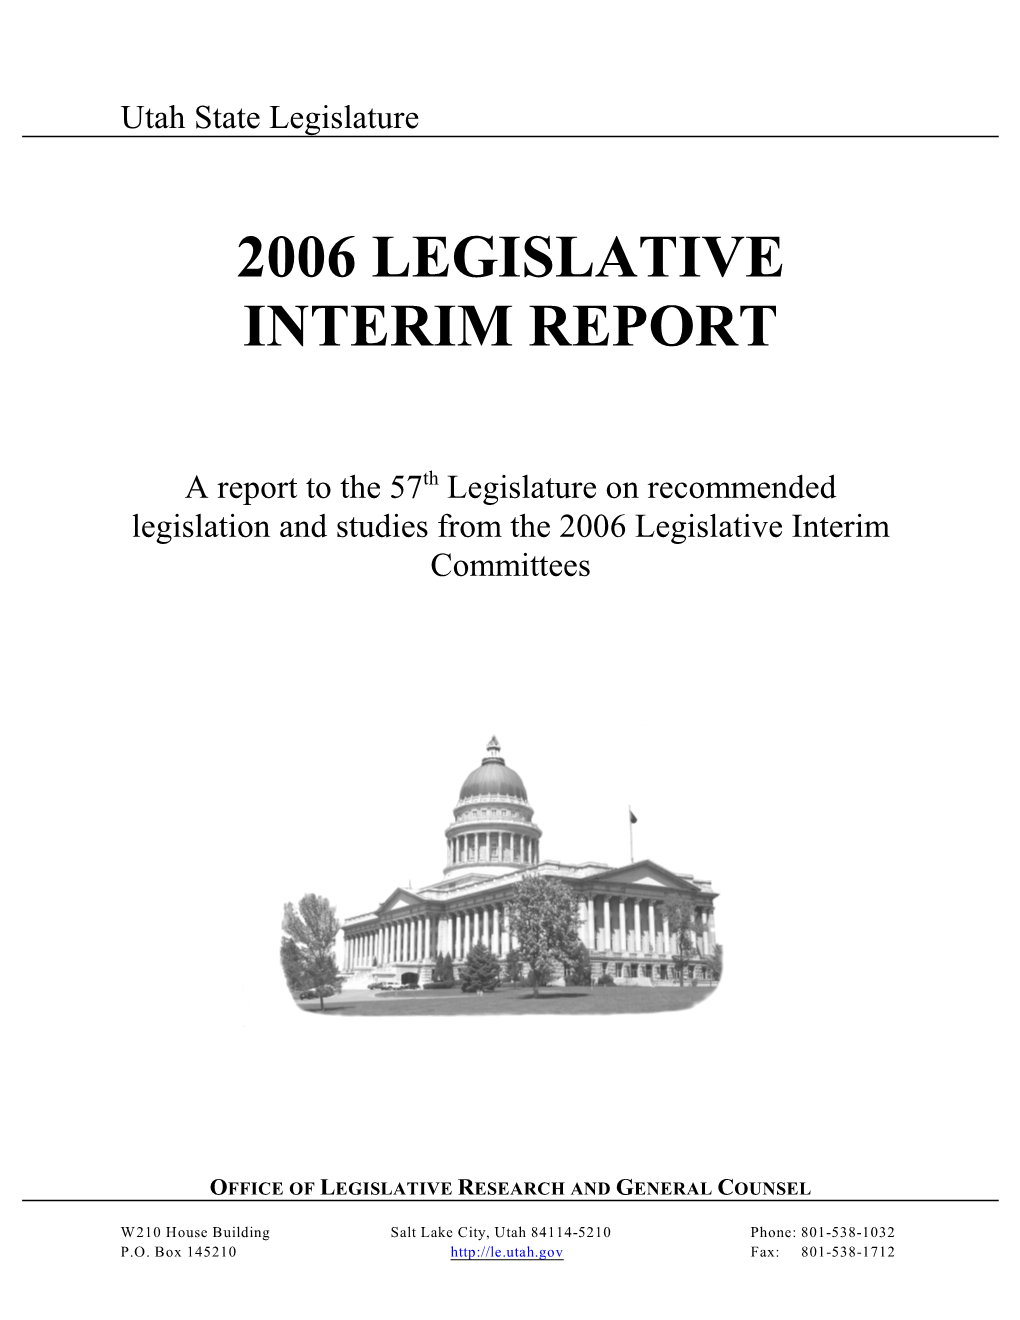 2006 Legislative Interim Report